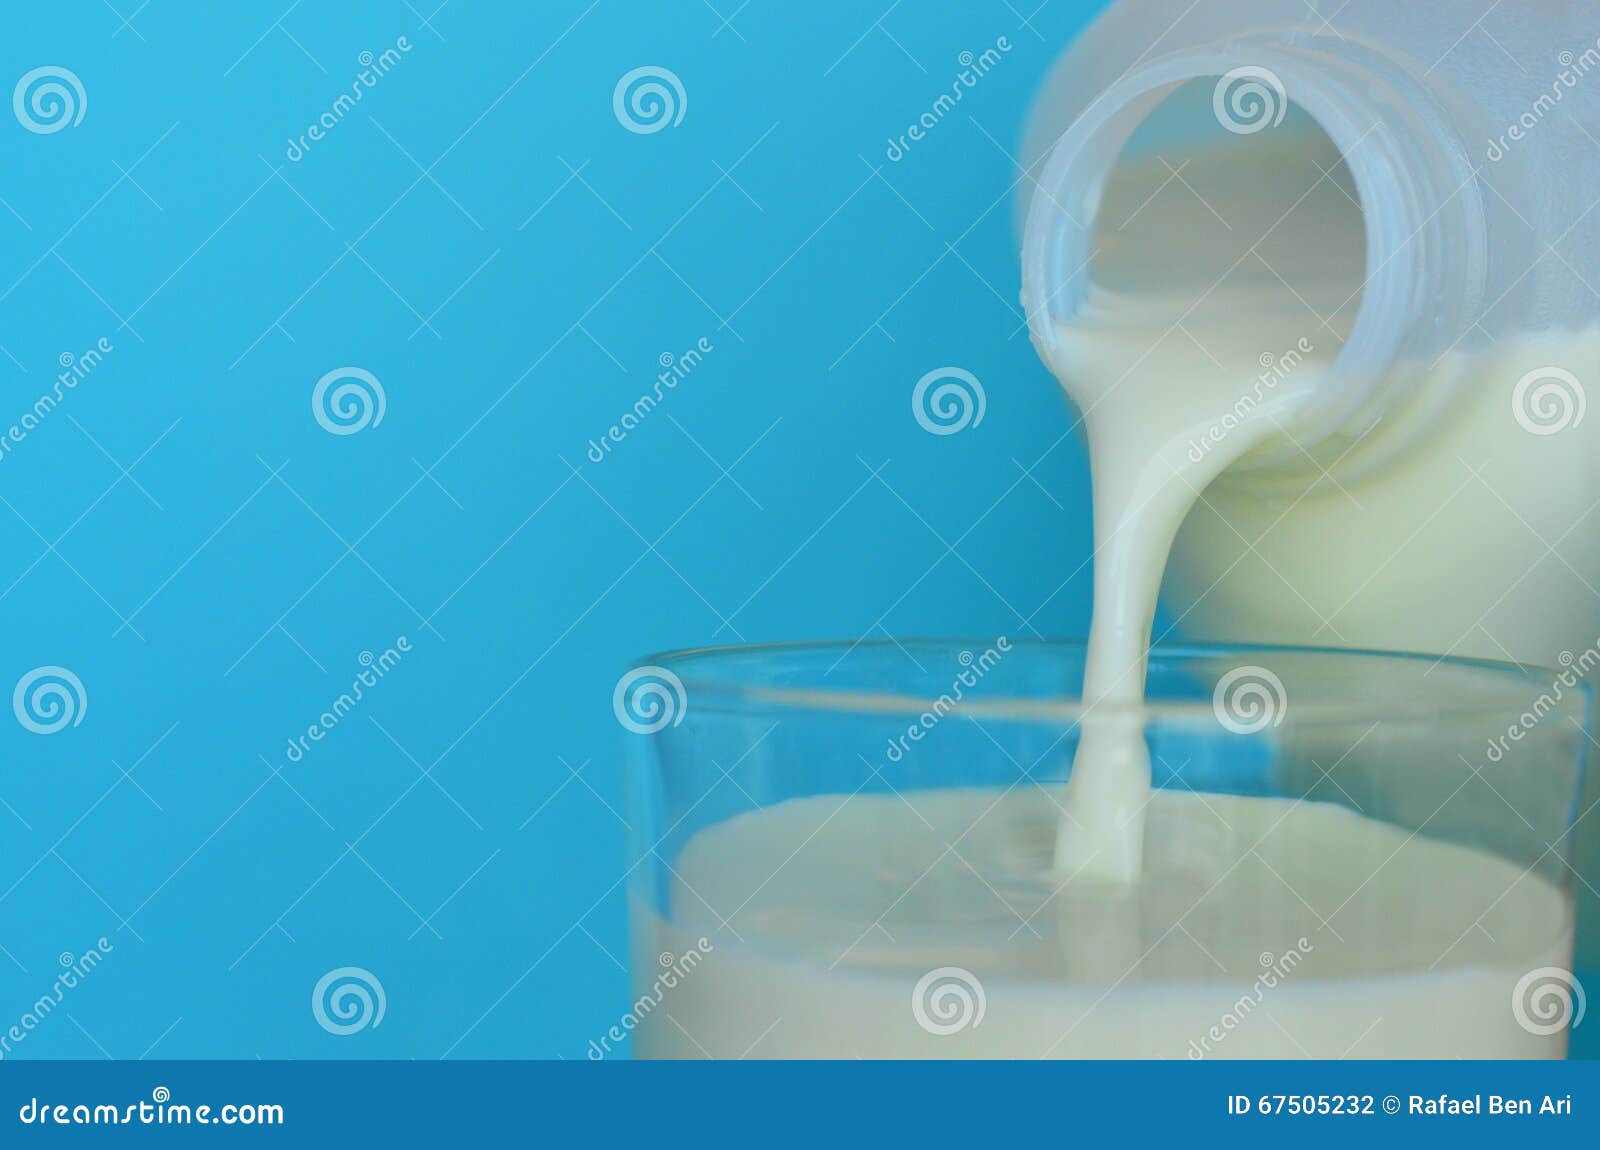 fresh milk pour into a glass